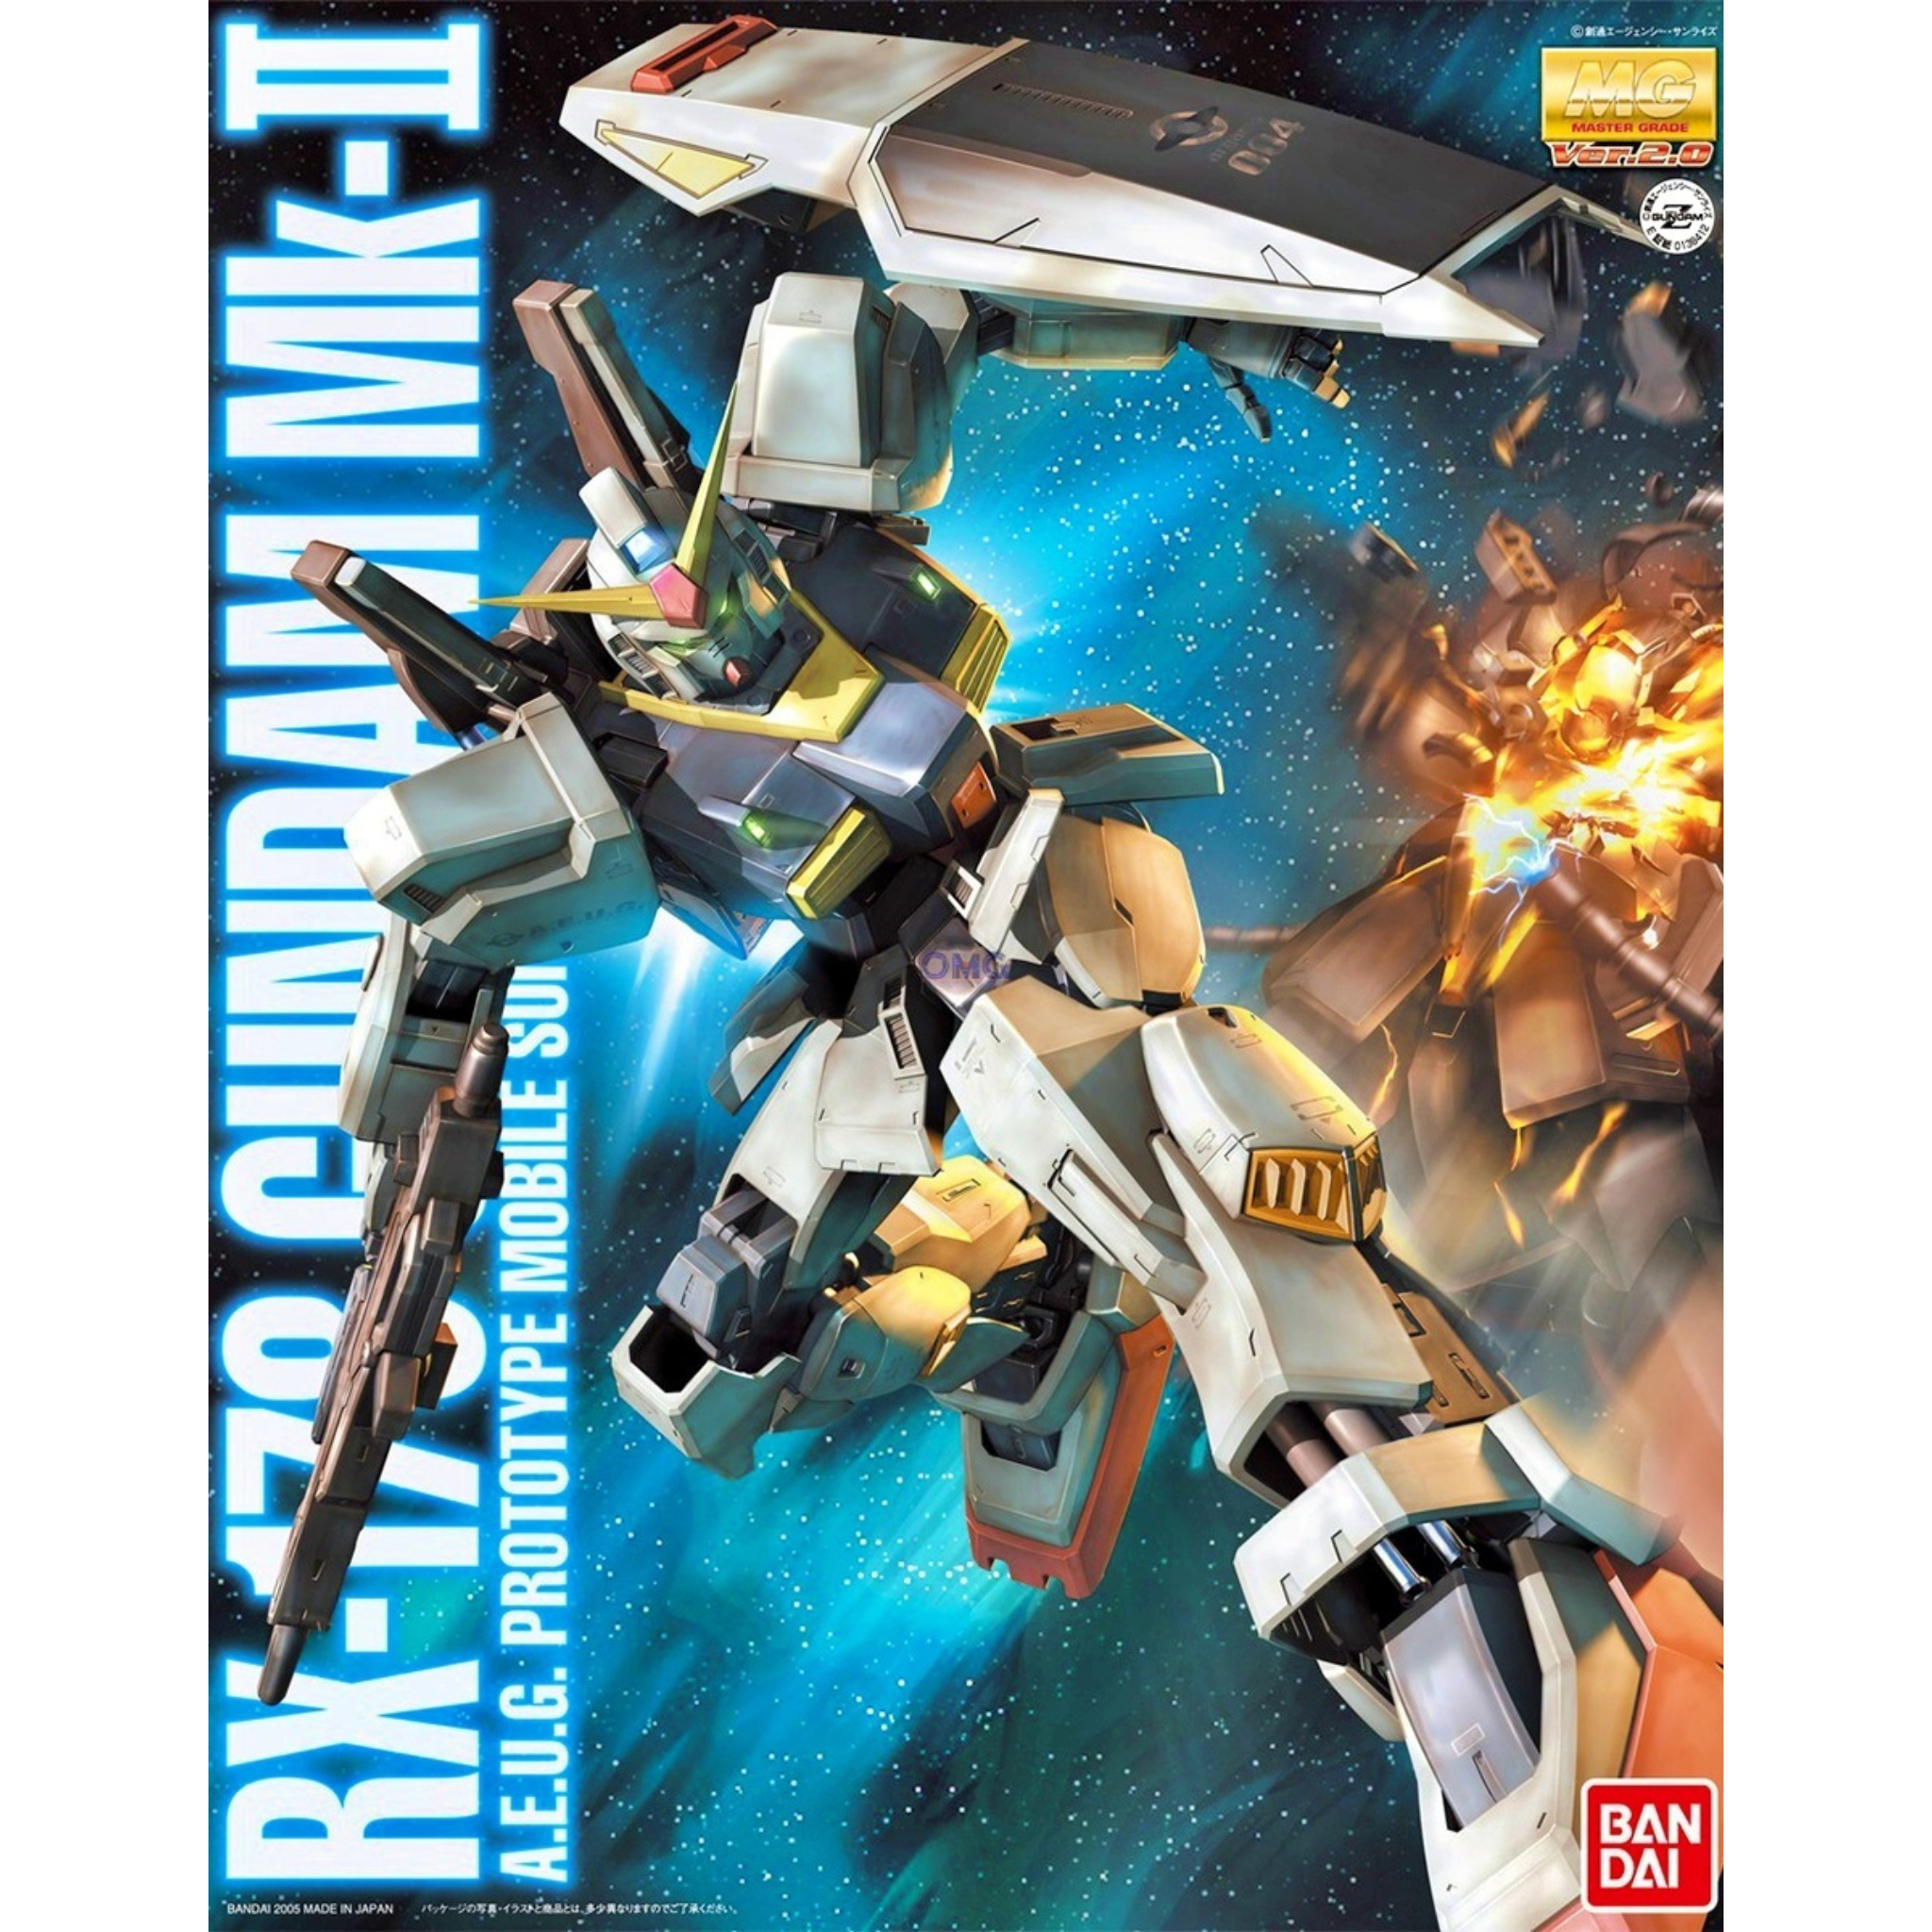 MG 1/100 RX-178 Gundam Mk II 2.0 (AEUG Ver.) #0138412 by Bandai